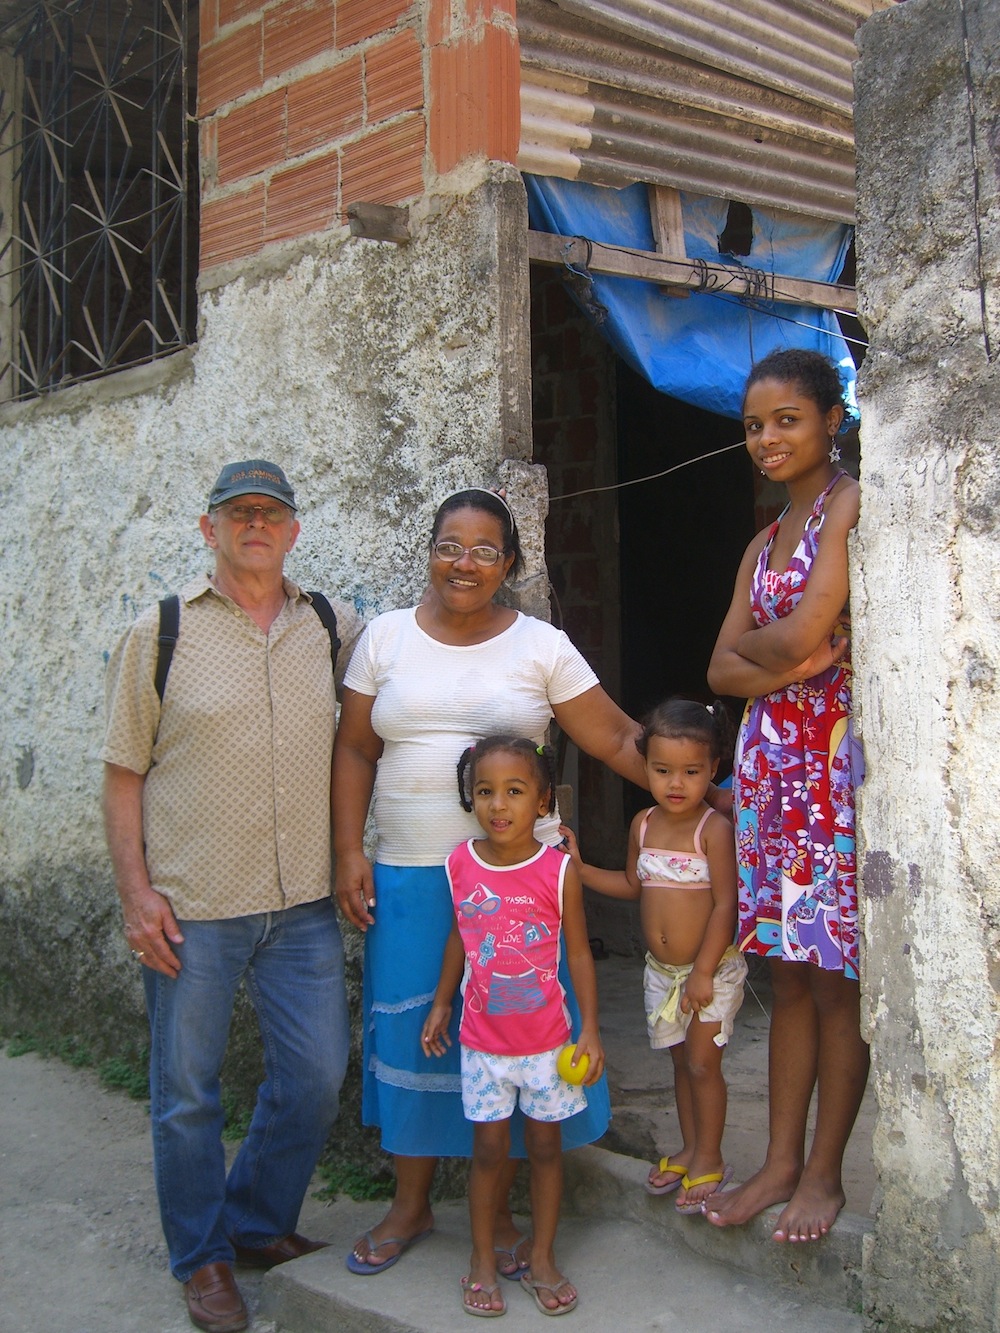 Lance Brown, winner of the 2010 raffle with family in Asa Branca, Rio de Janeiro, Brazil, News